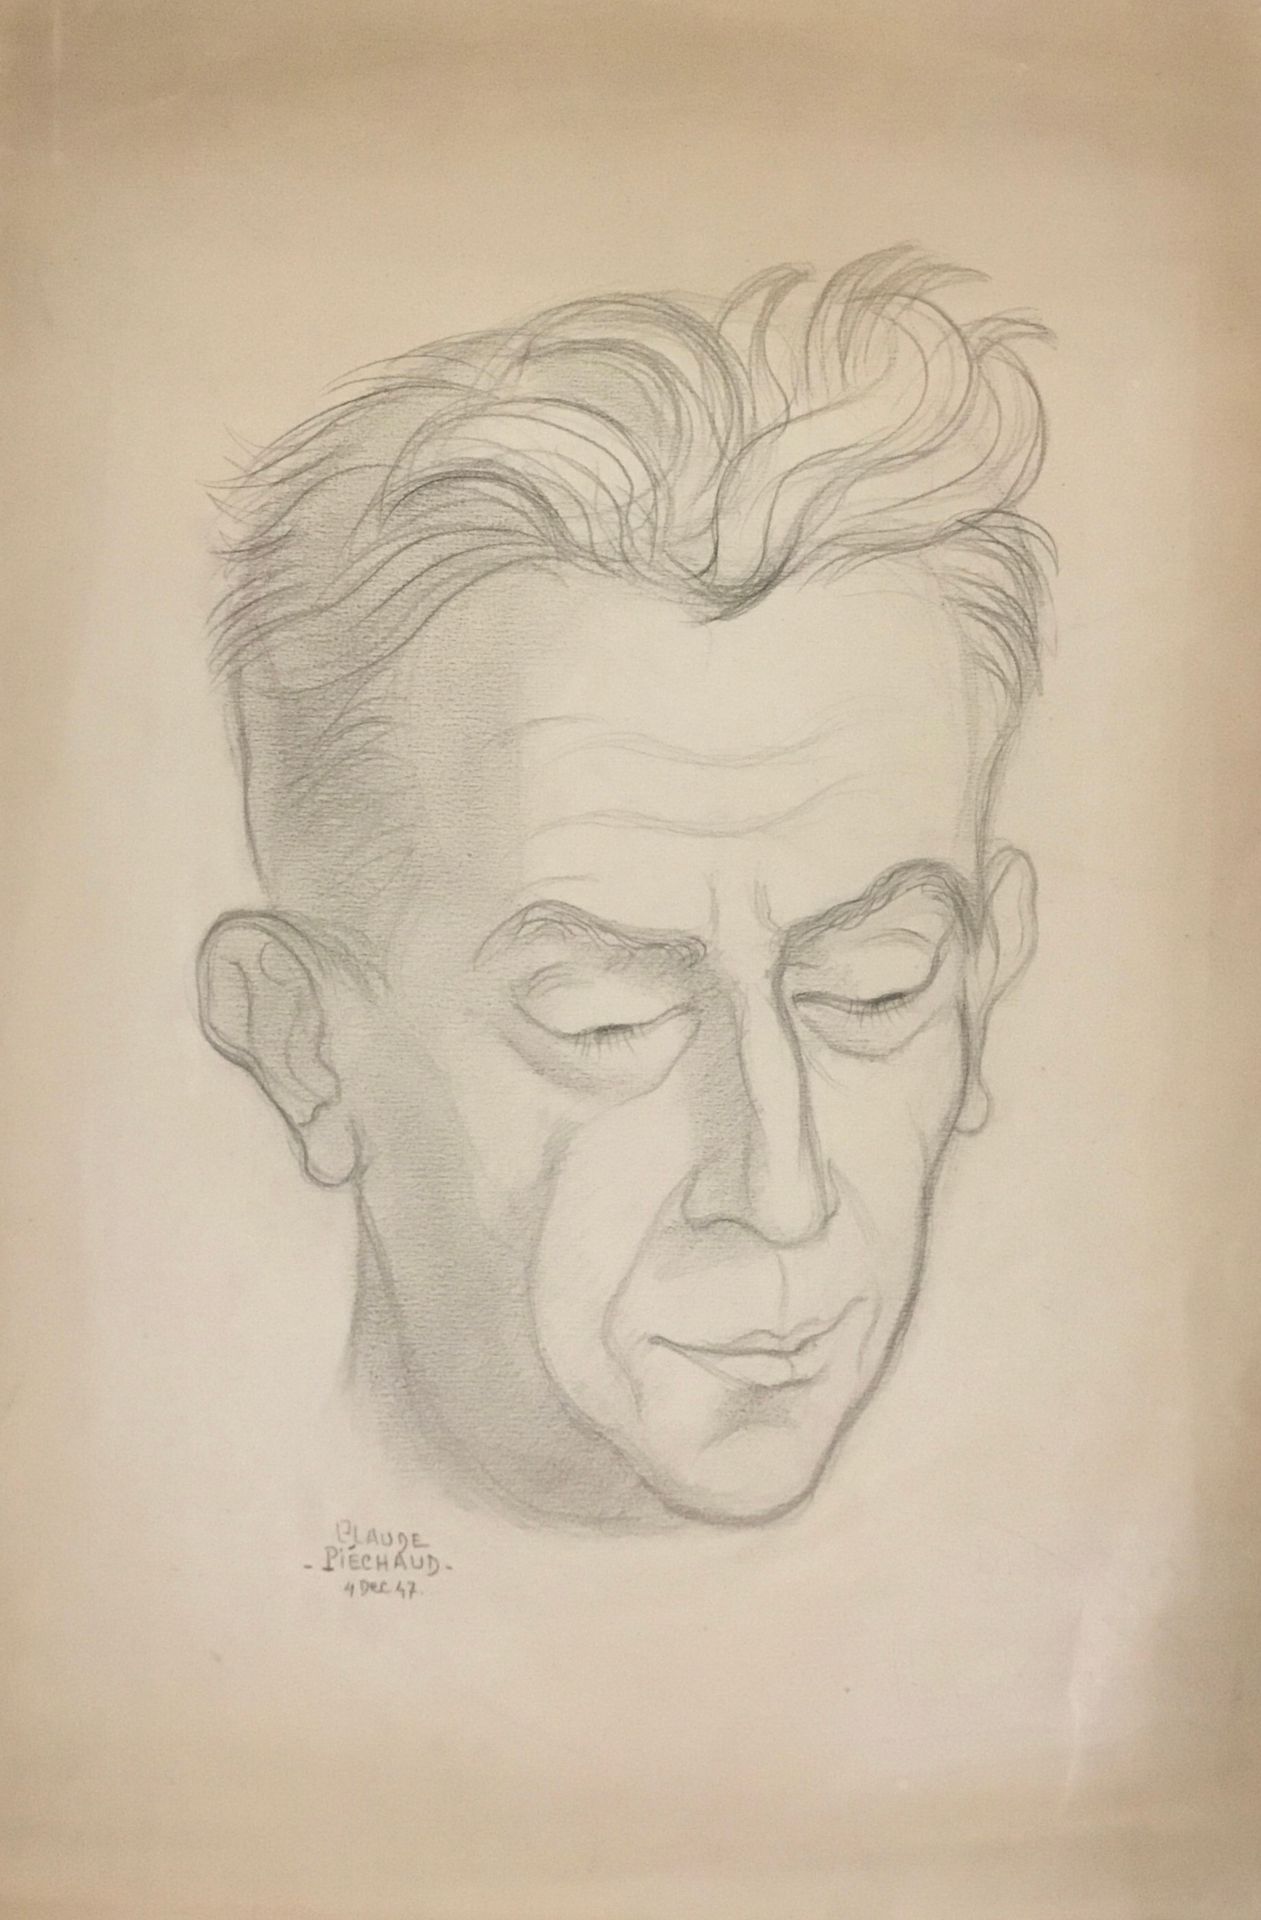 Null 皮考德-克劳德

铅笔画 马塞尔-艾梅的肖像。

格式 34 x 27 cm